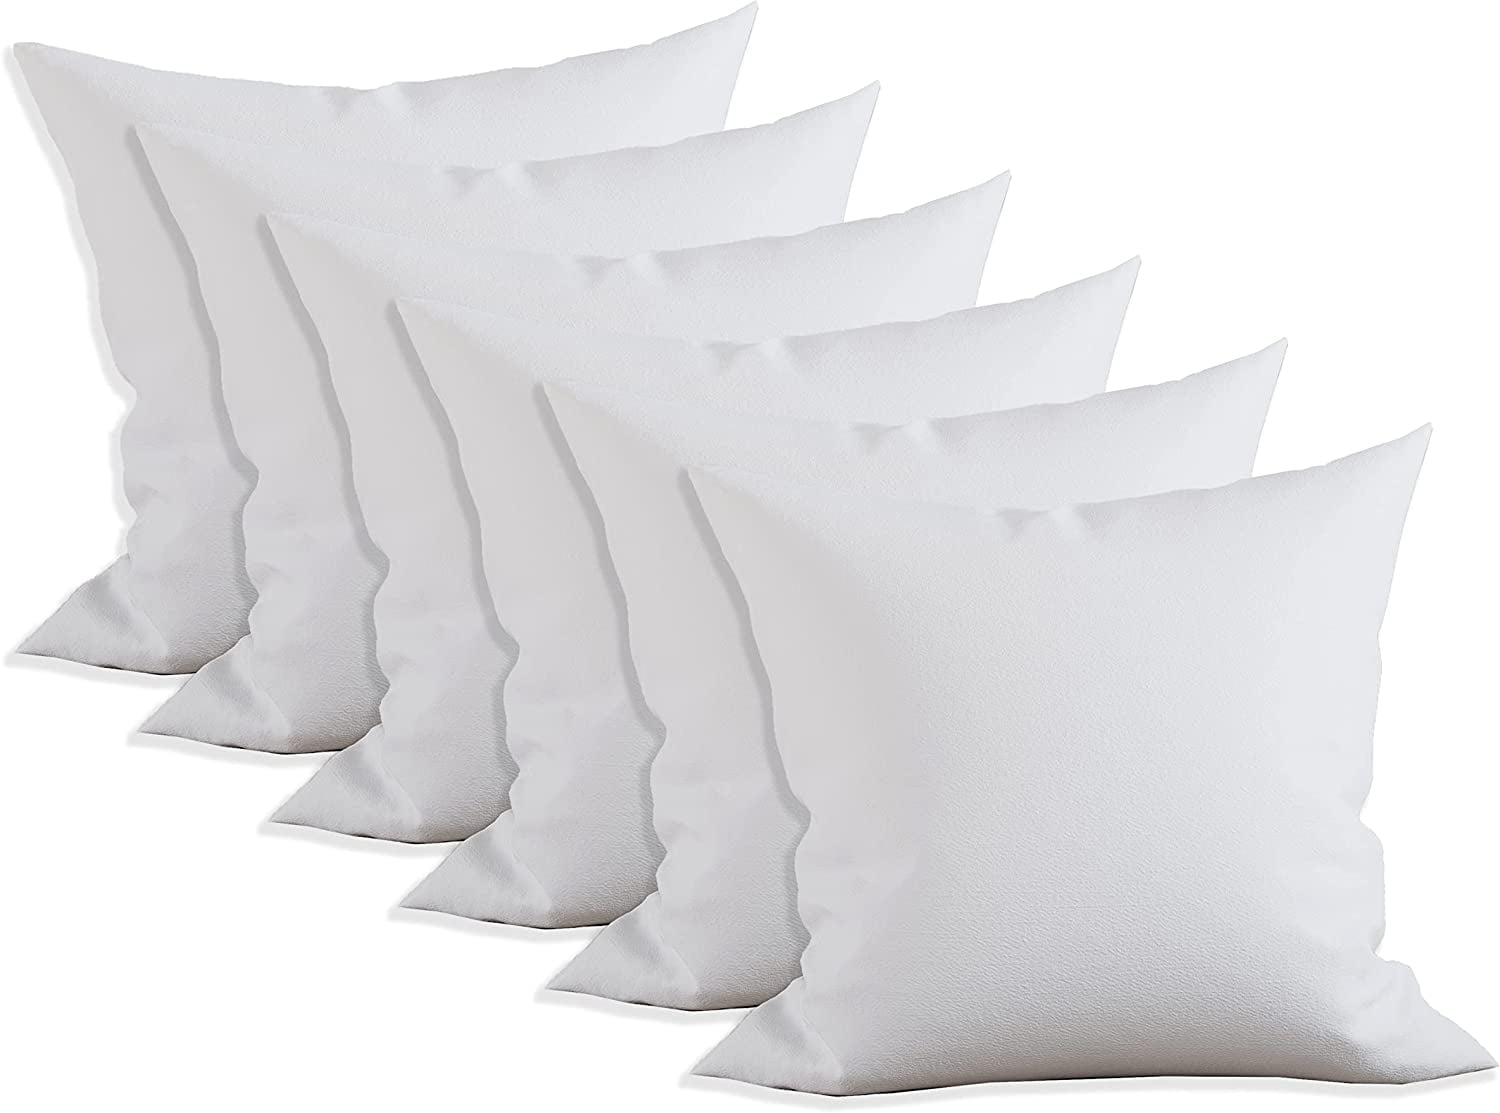 18 inch | 16 inch | 14 inch | 12 inch| 10 inch | 8 inch | Round Hypoallergenic Polyester Filled Pillow Insert